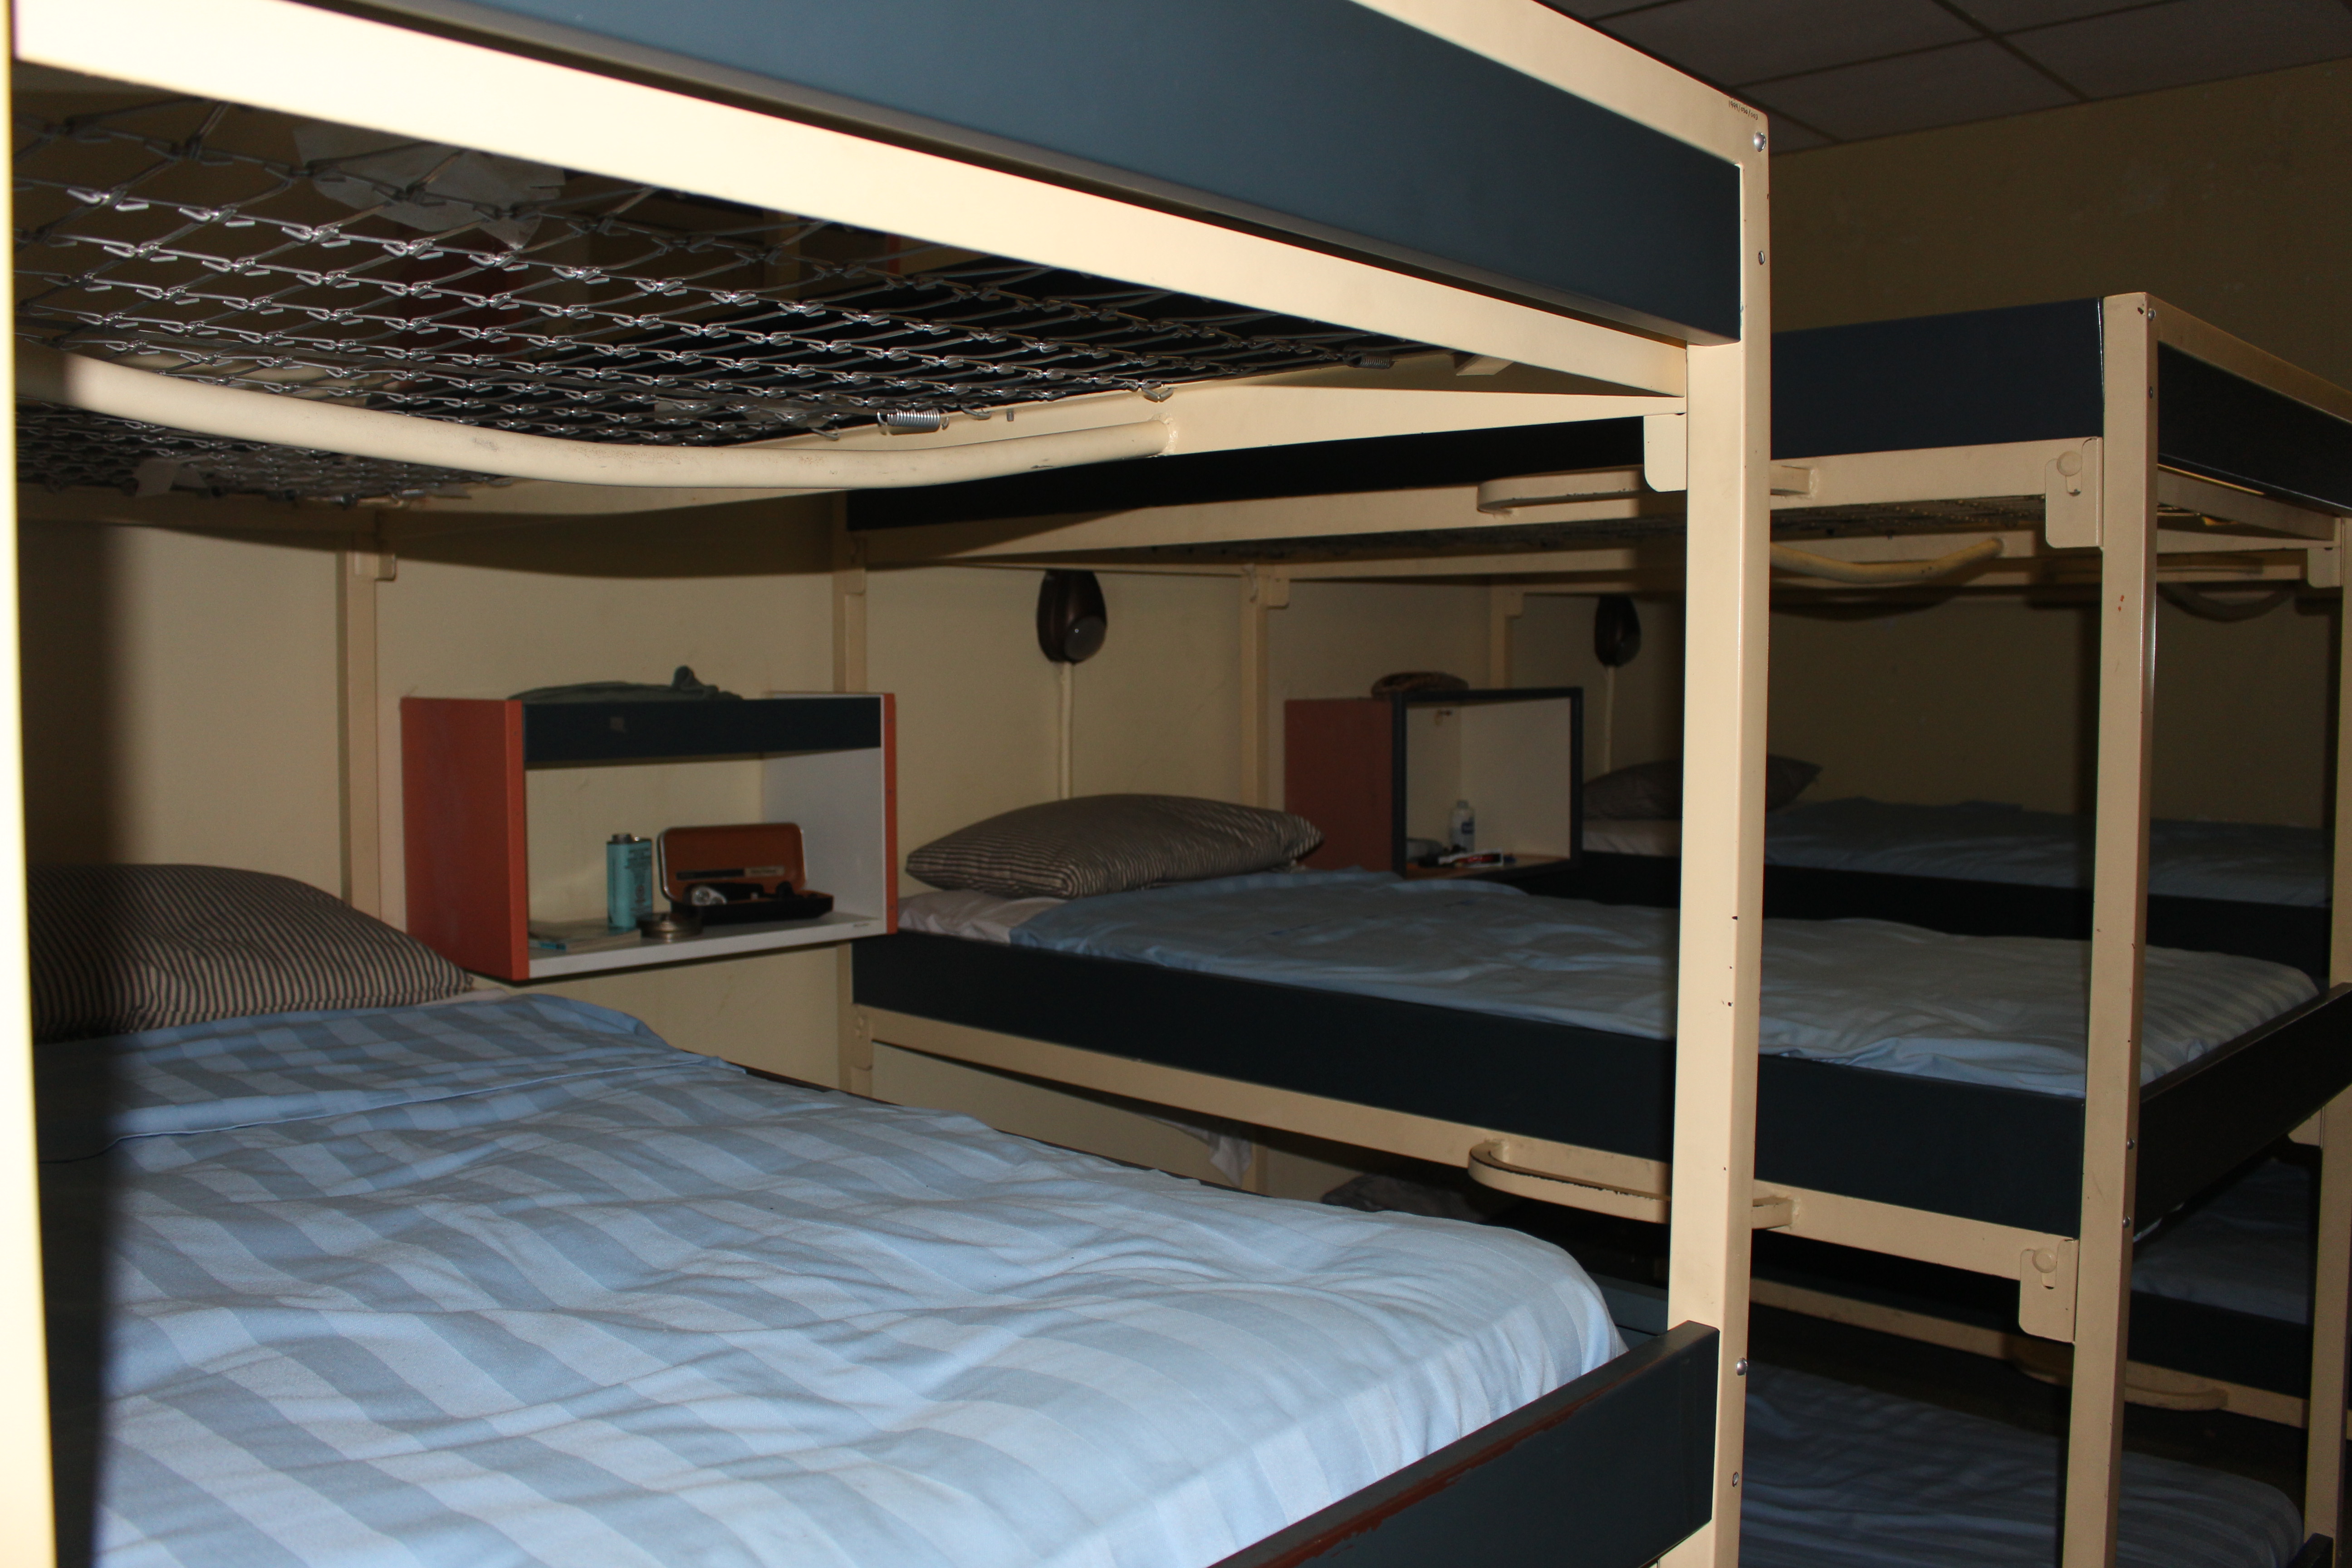 The bunkbeds in the Forgotten Bedroom.